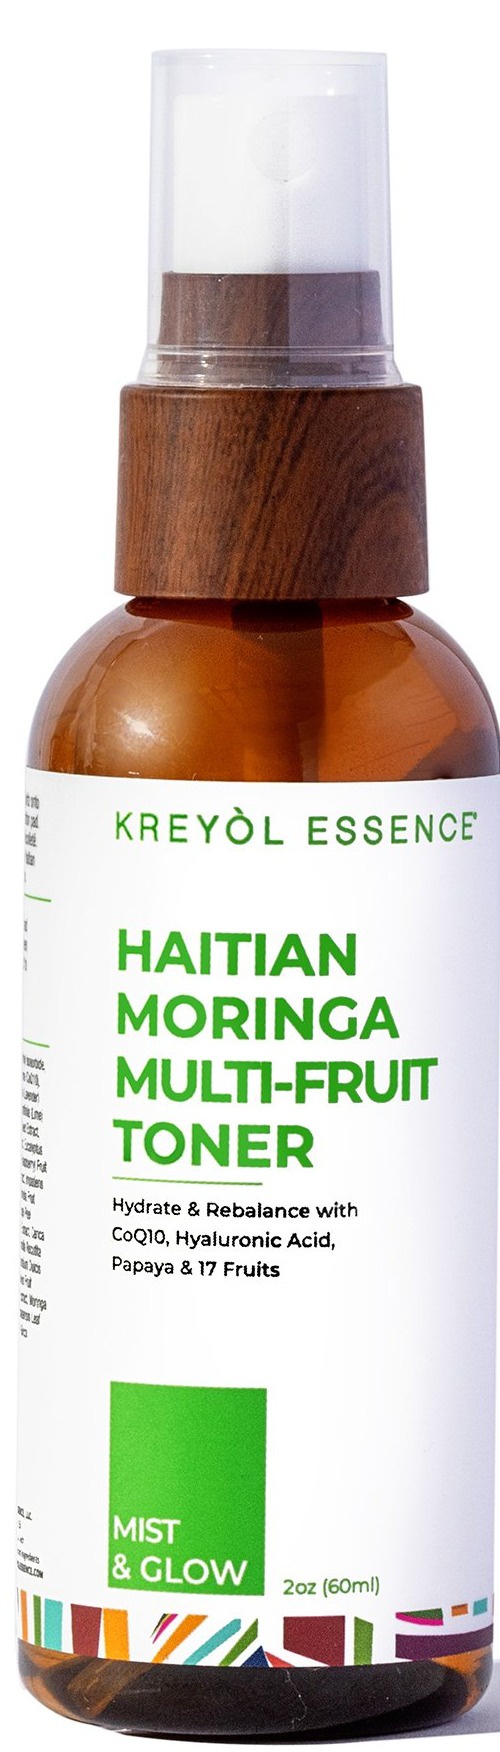 Kreyol Essence Haitian Moringa Oil: "Mist + Glow" Toner